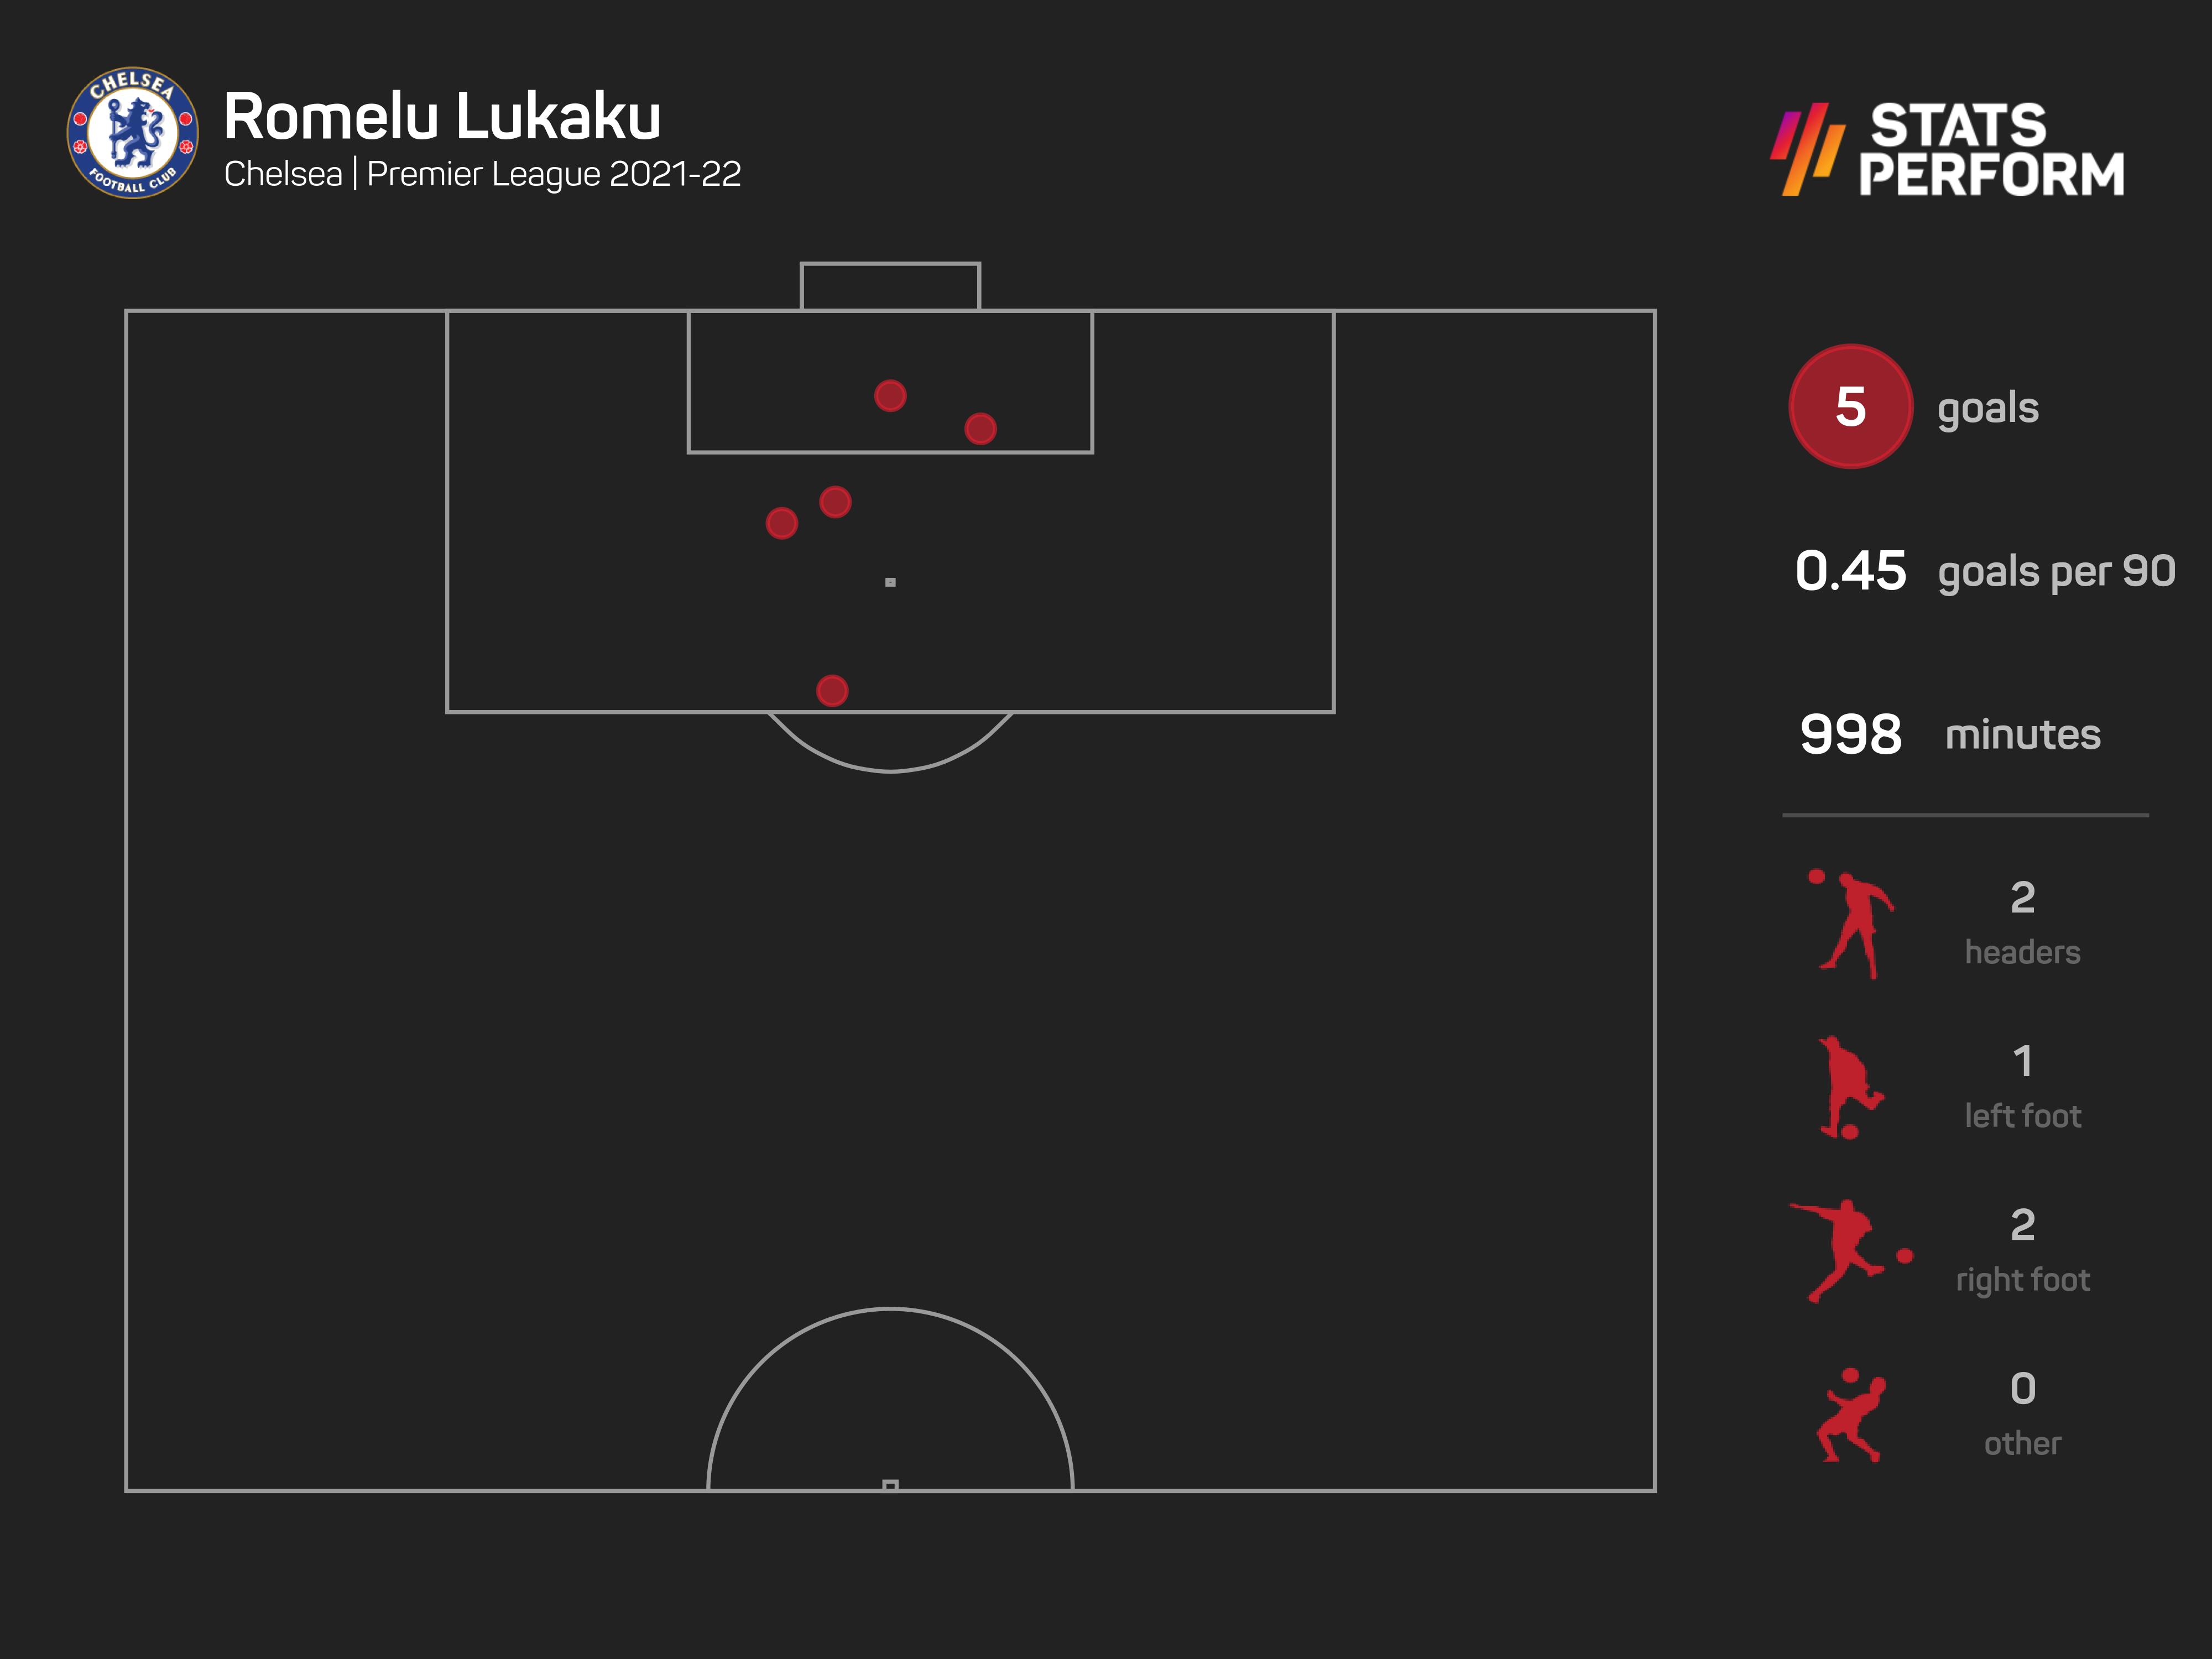 Romelu Lukaku has five Premier League goals this season